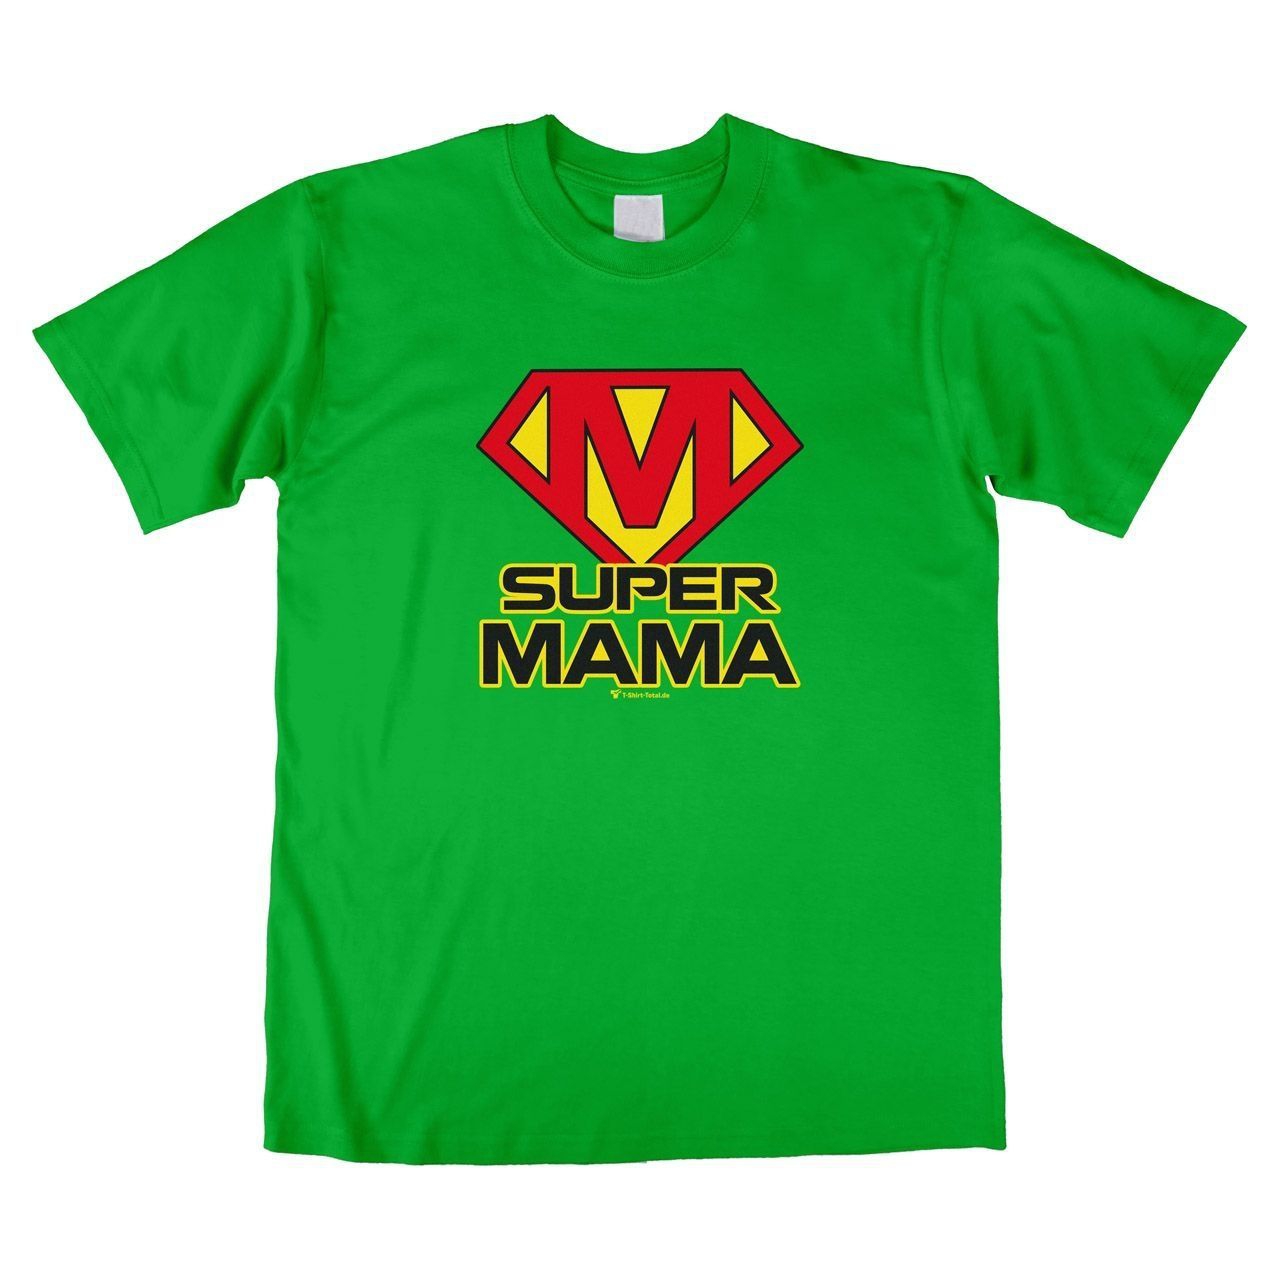 Super Mama Unisex T-Shirt grün Small